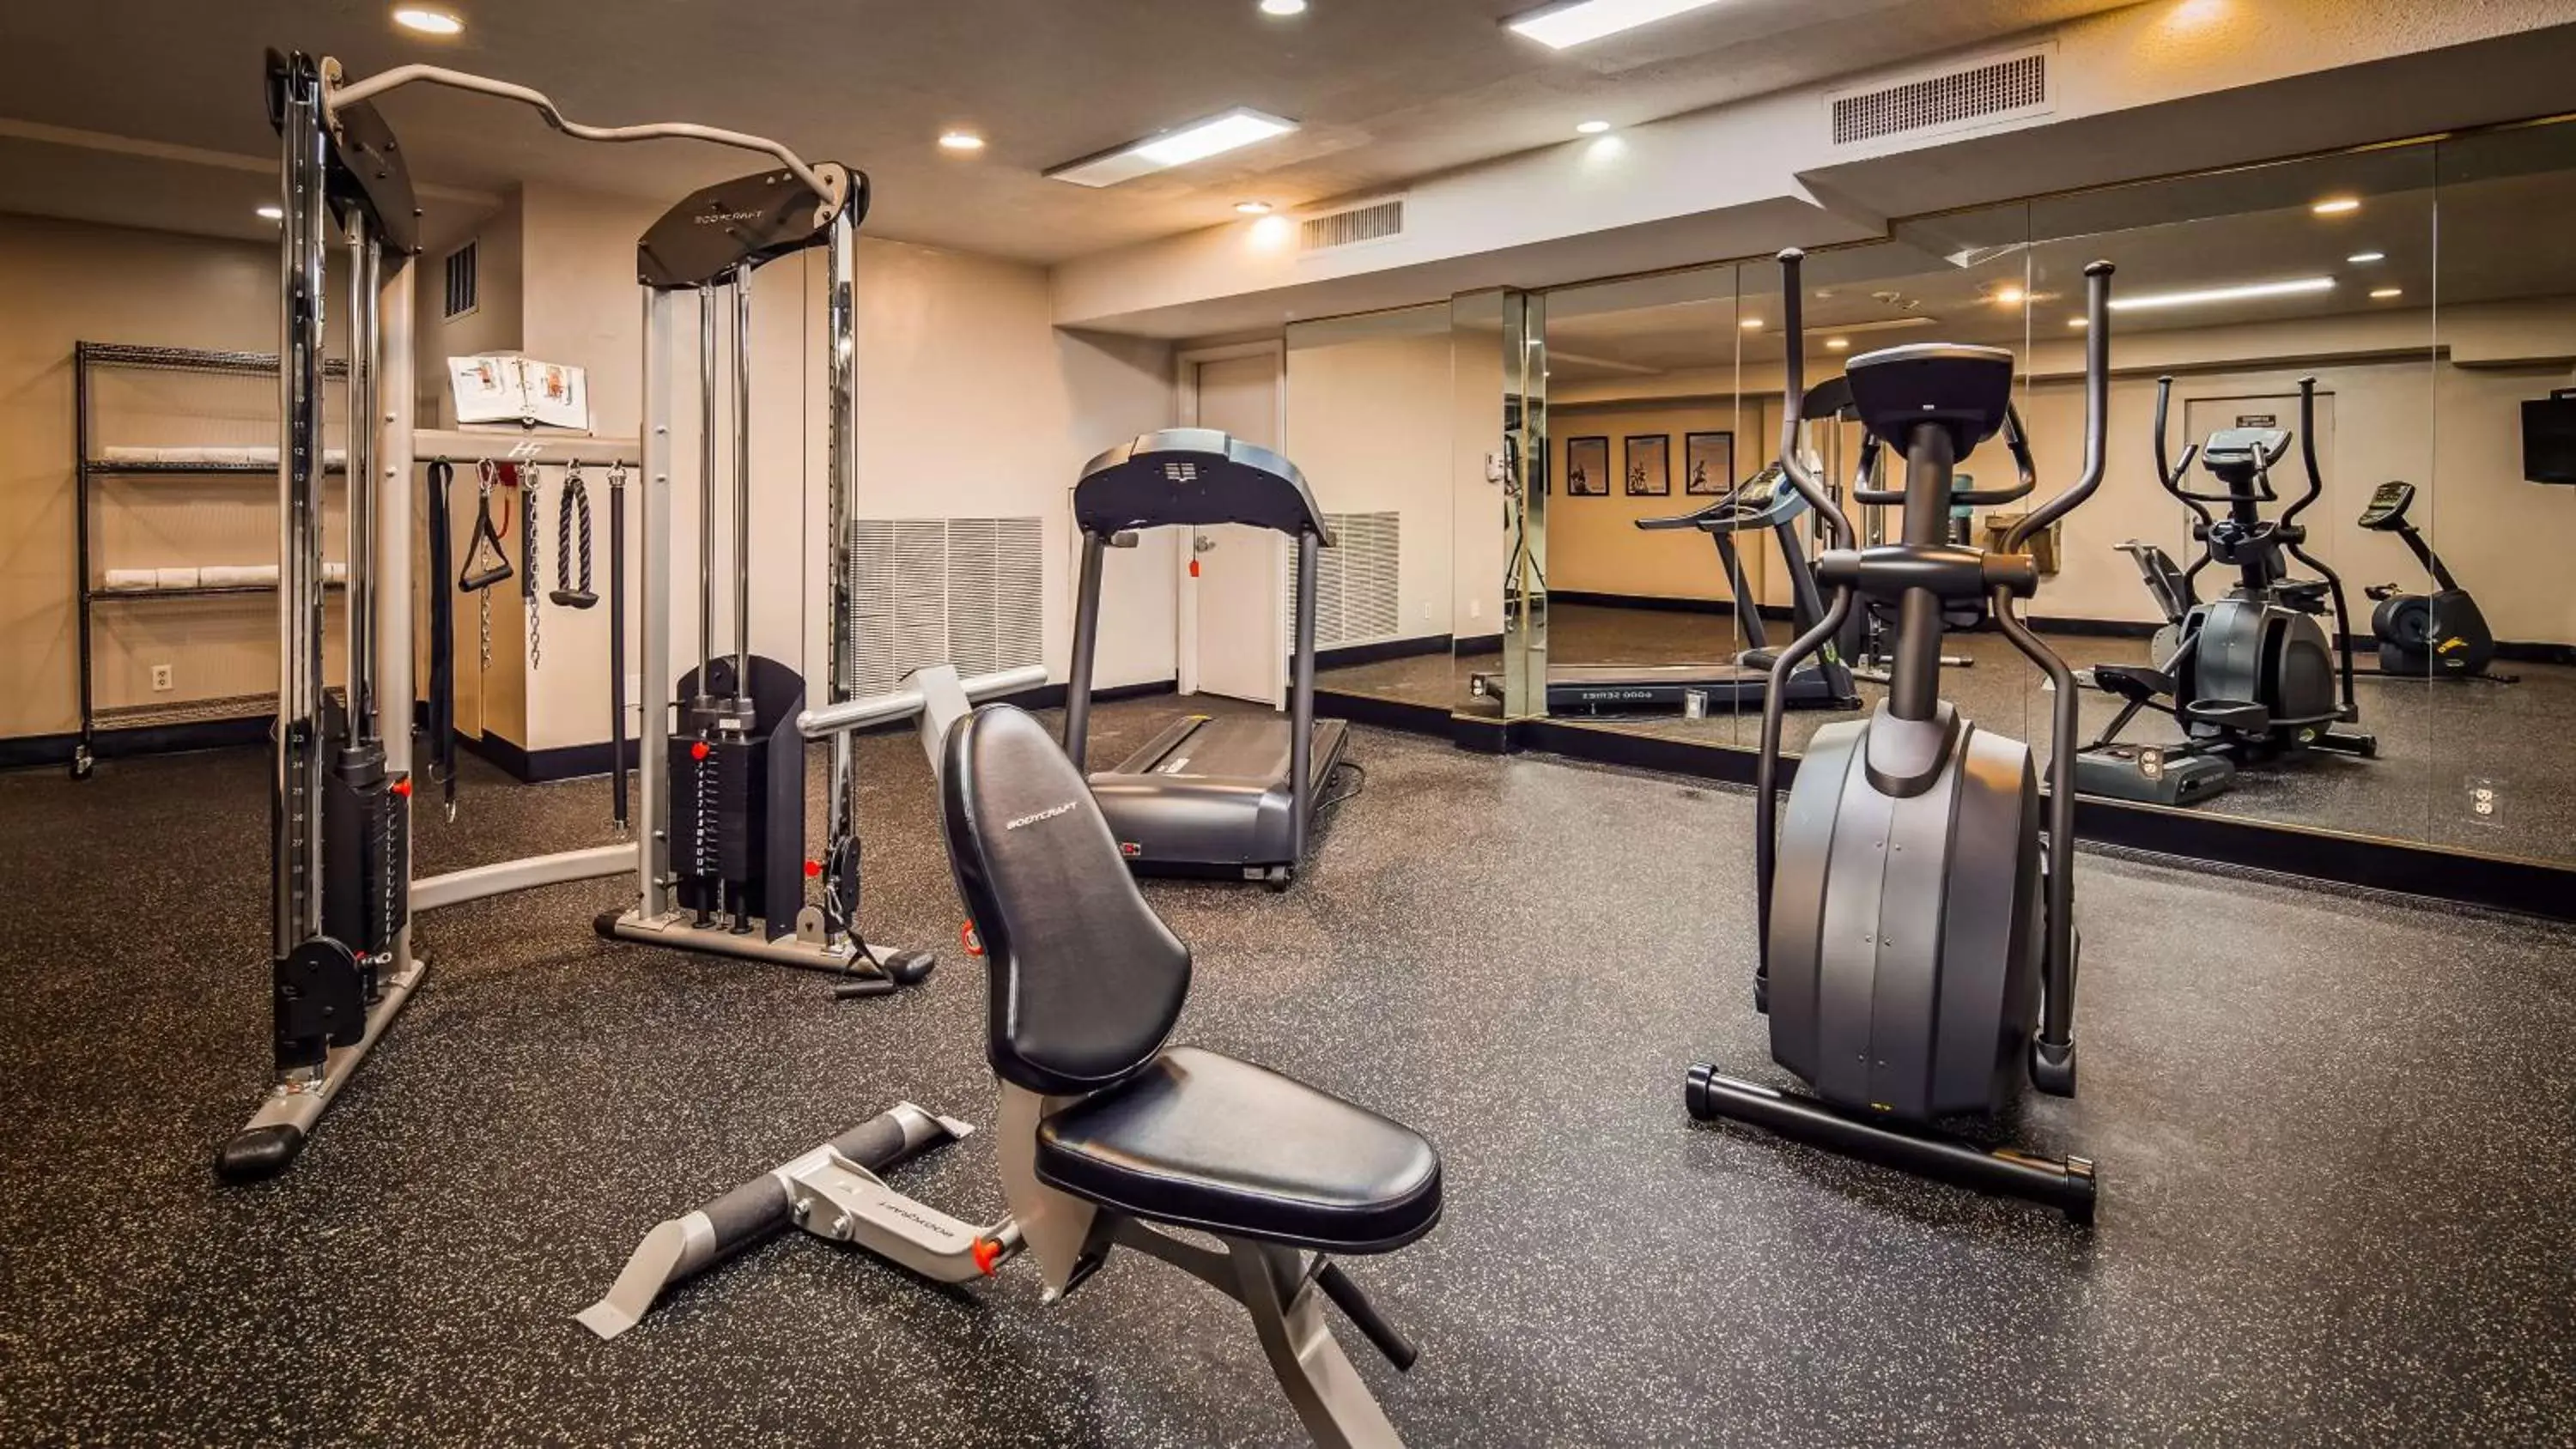 Fitness centre/facilities, Fitness Center/Facilities in Hotel Pentagon